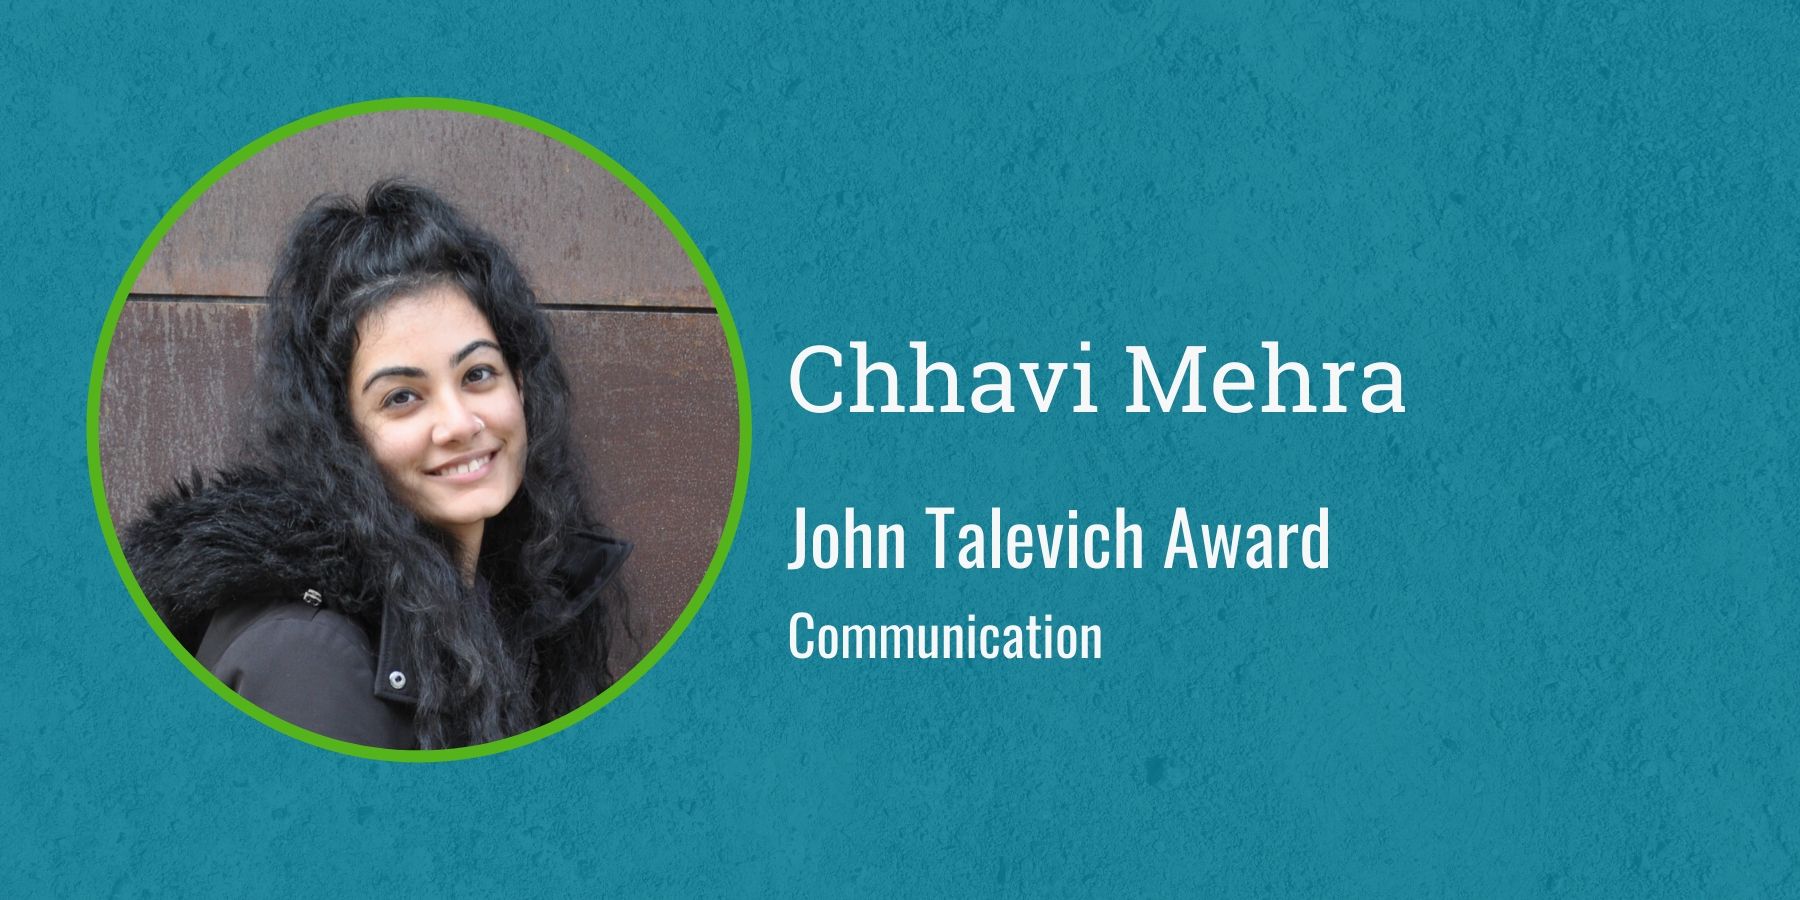 Photo of Chhavi Mehra with text John Talevich Award, Communication